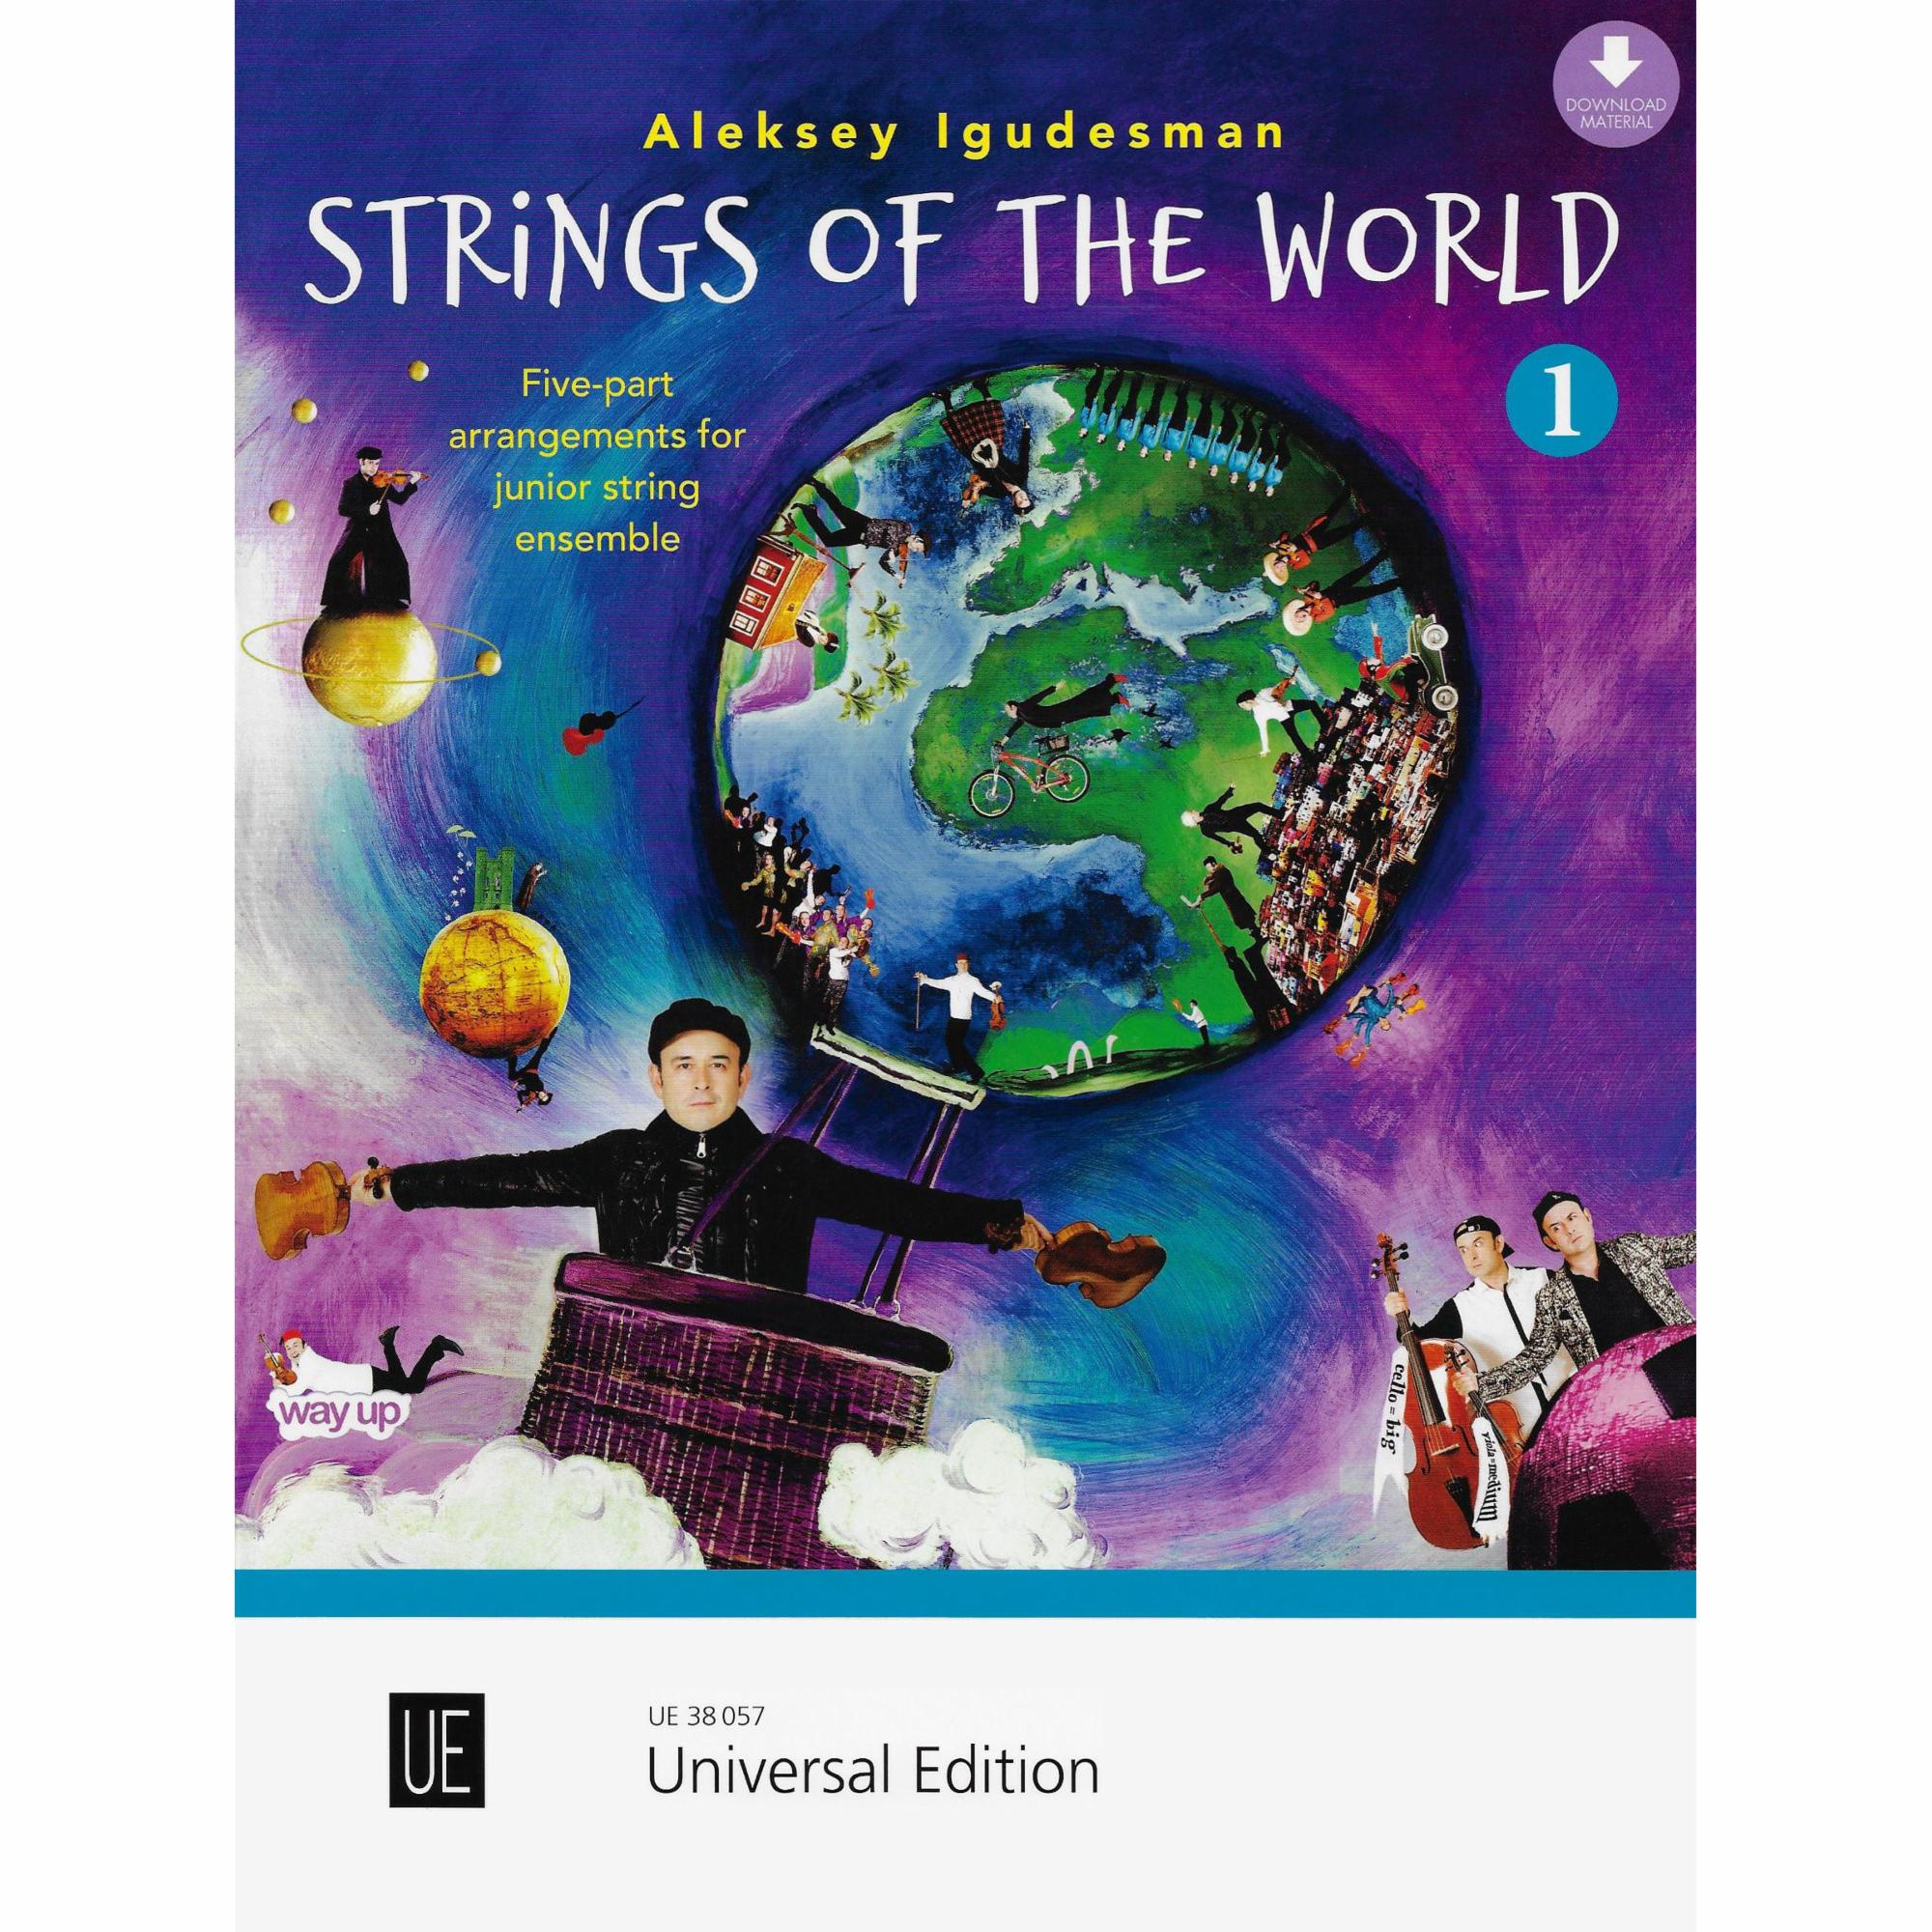 Strings of the World: Five-Part Arrangements for Junior String Ensemble